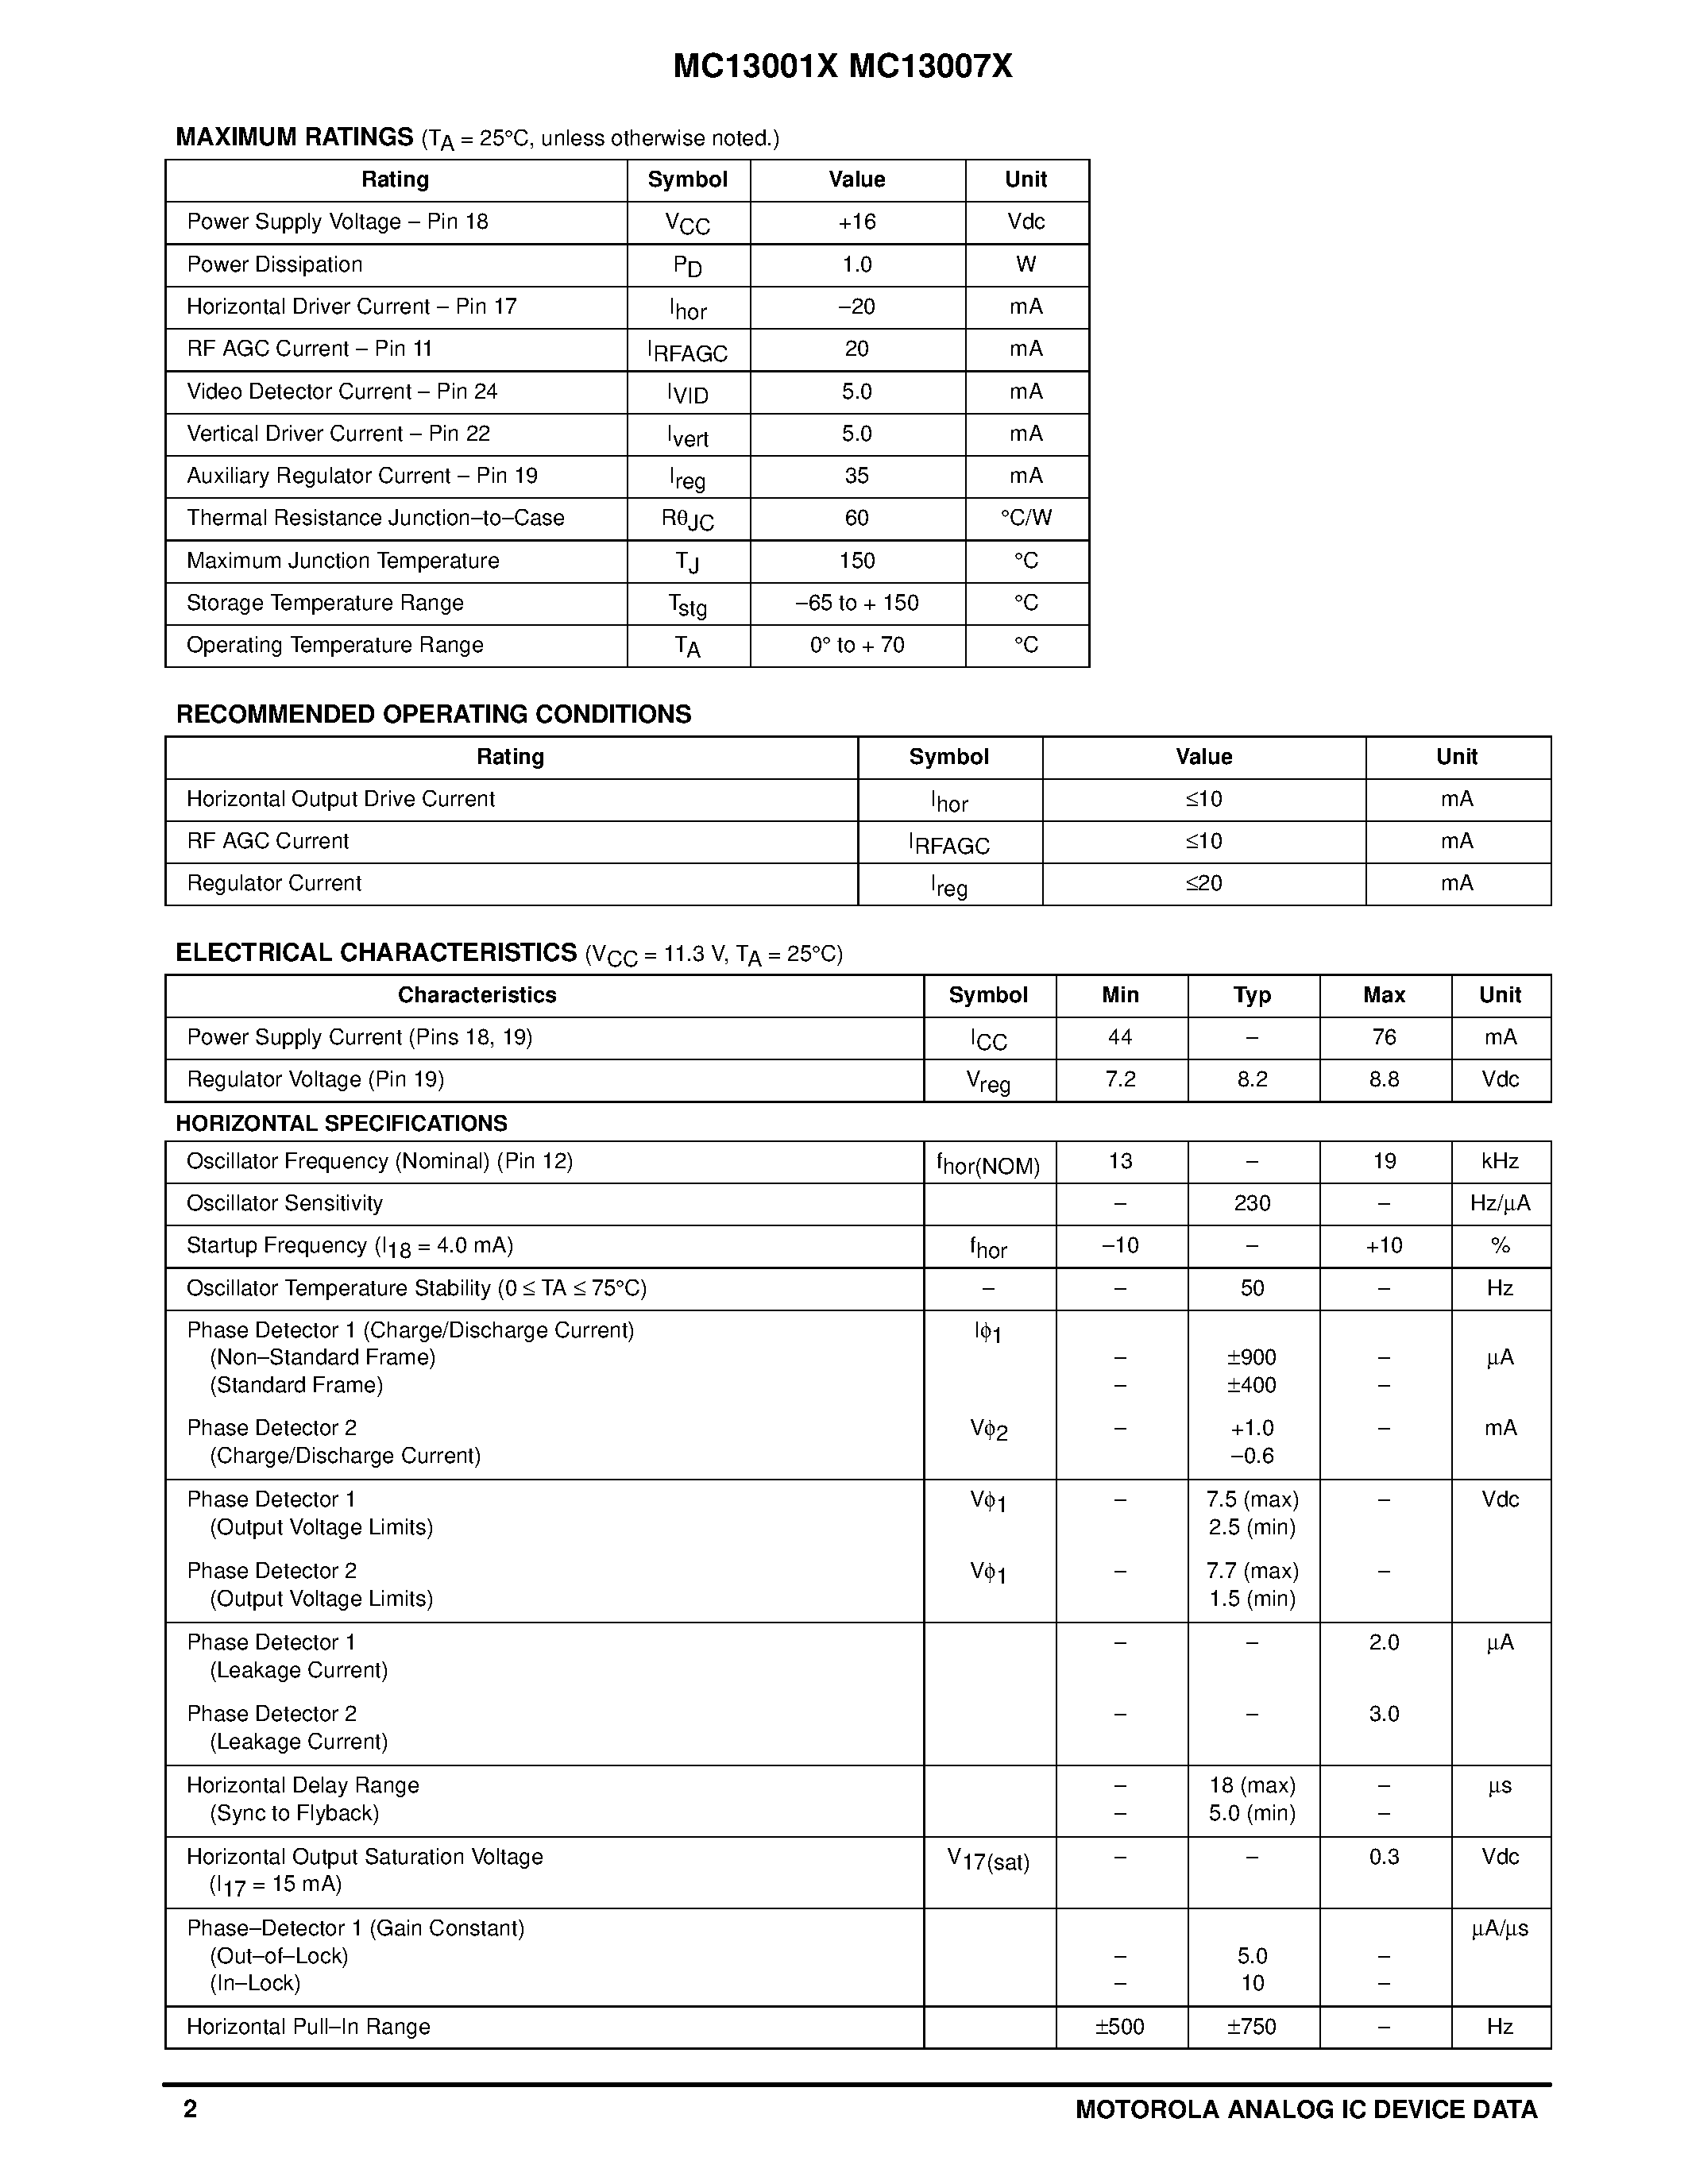 Datasheet MC13007XP - MONOMAX BLACK AND WHITE TV SUBSYSTEM page 2